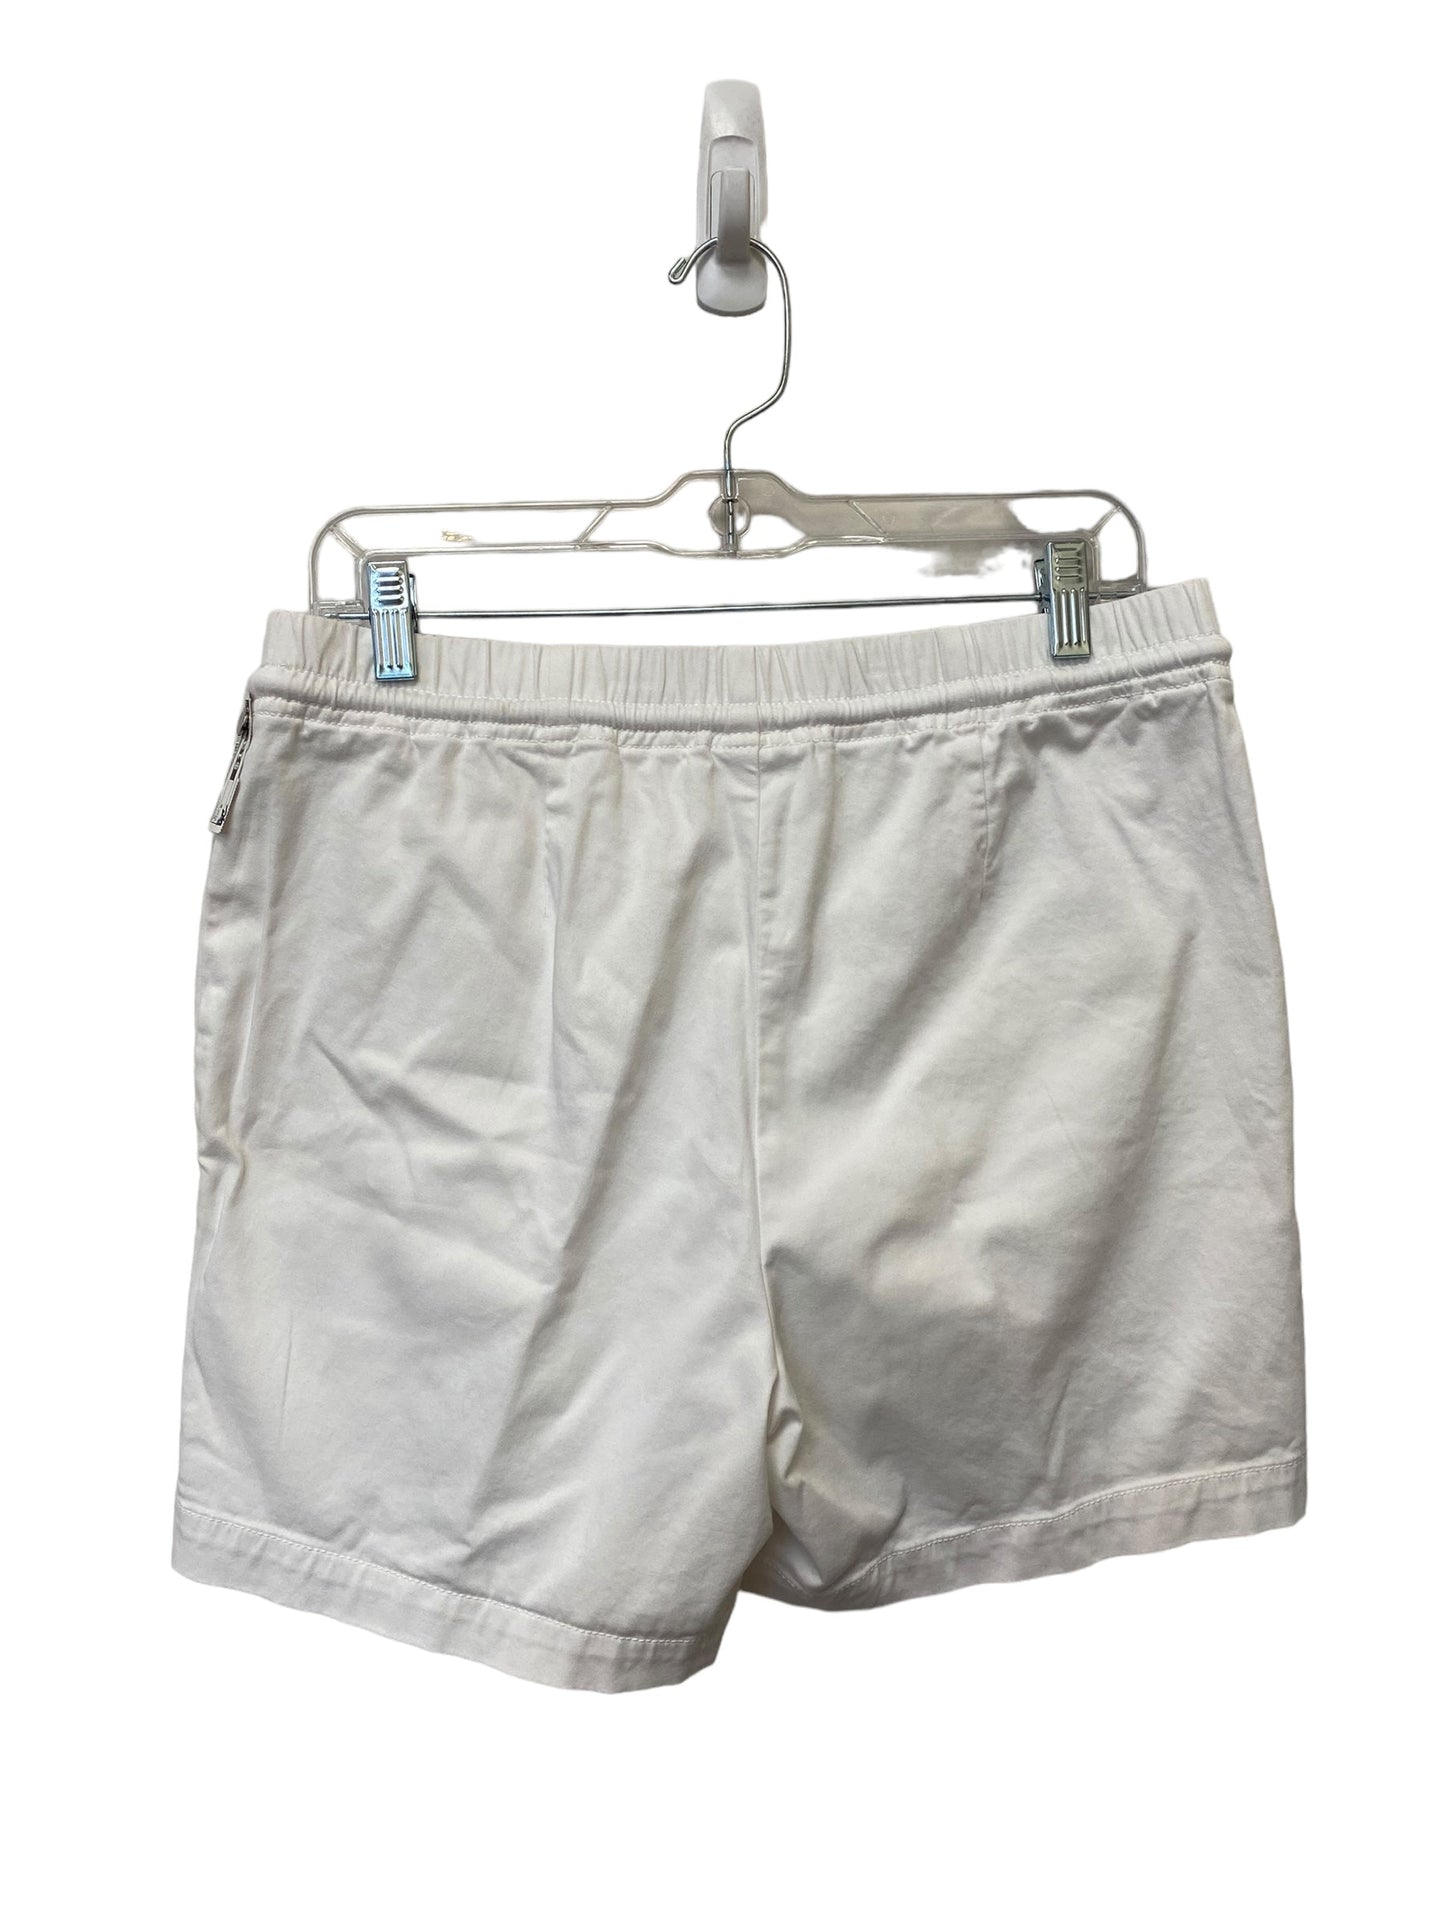 White Shorts J. Jill, Size S